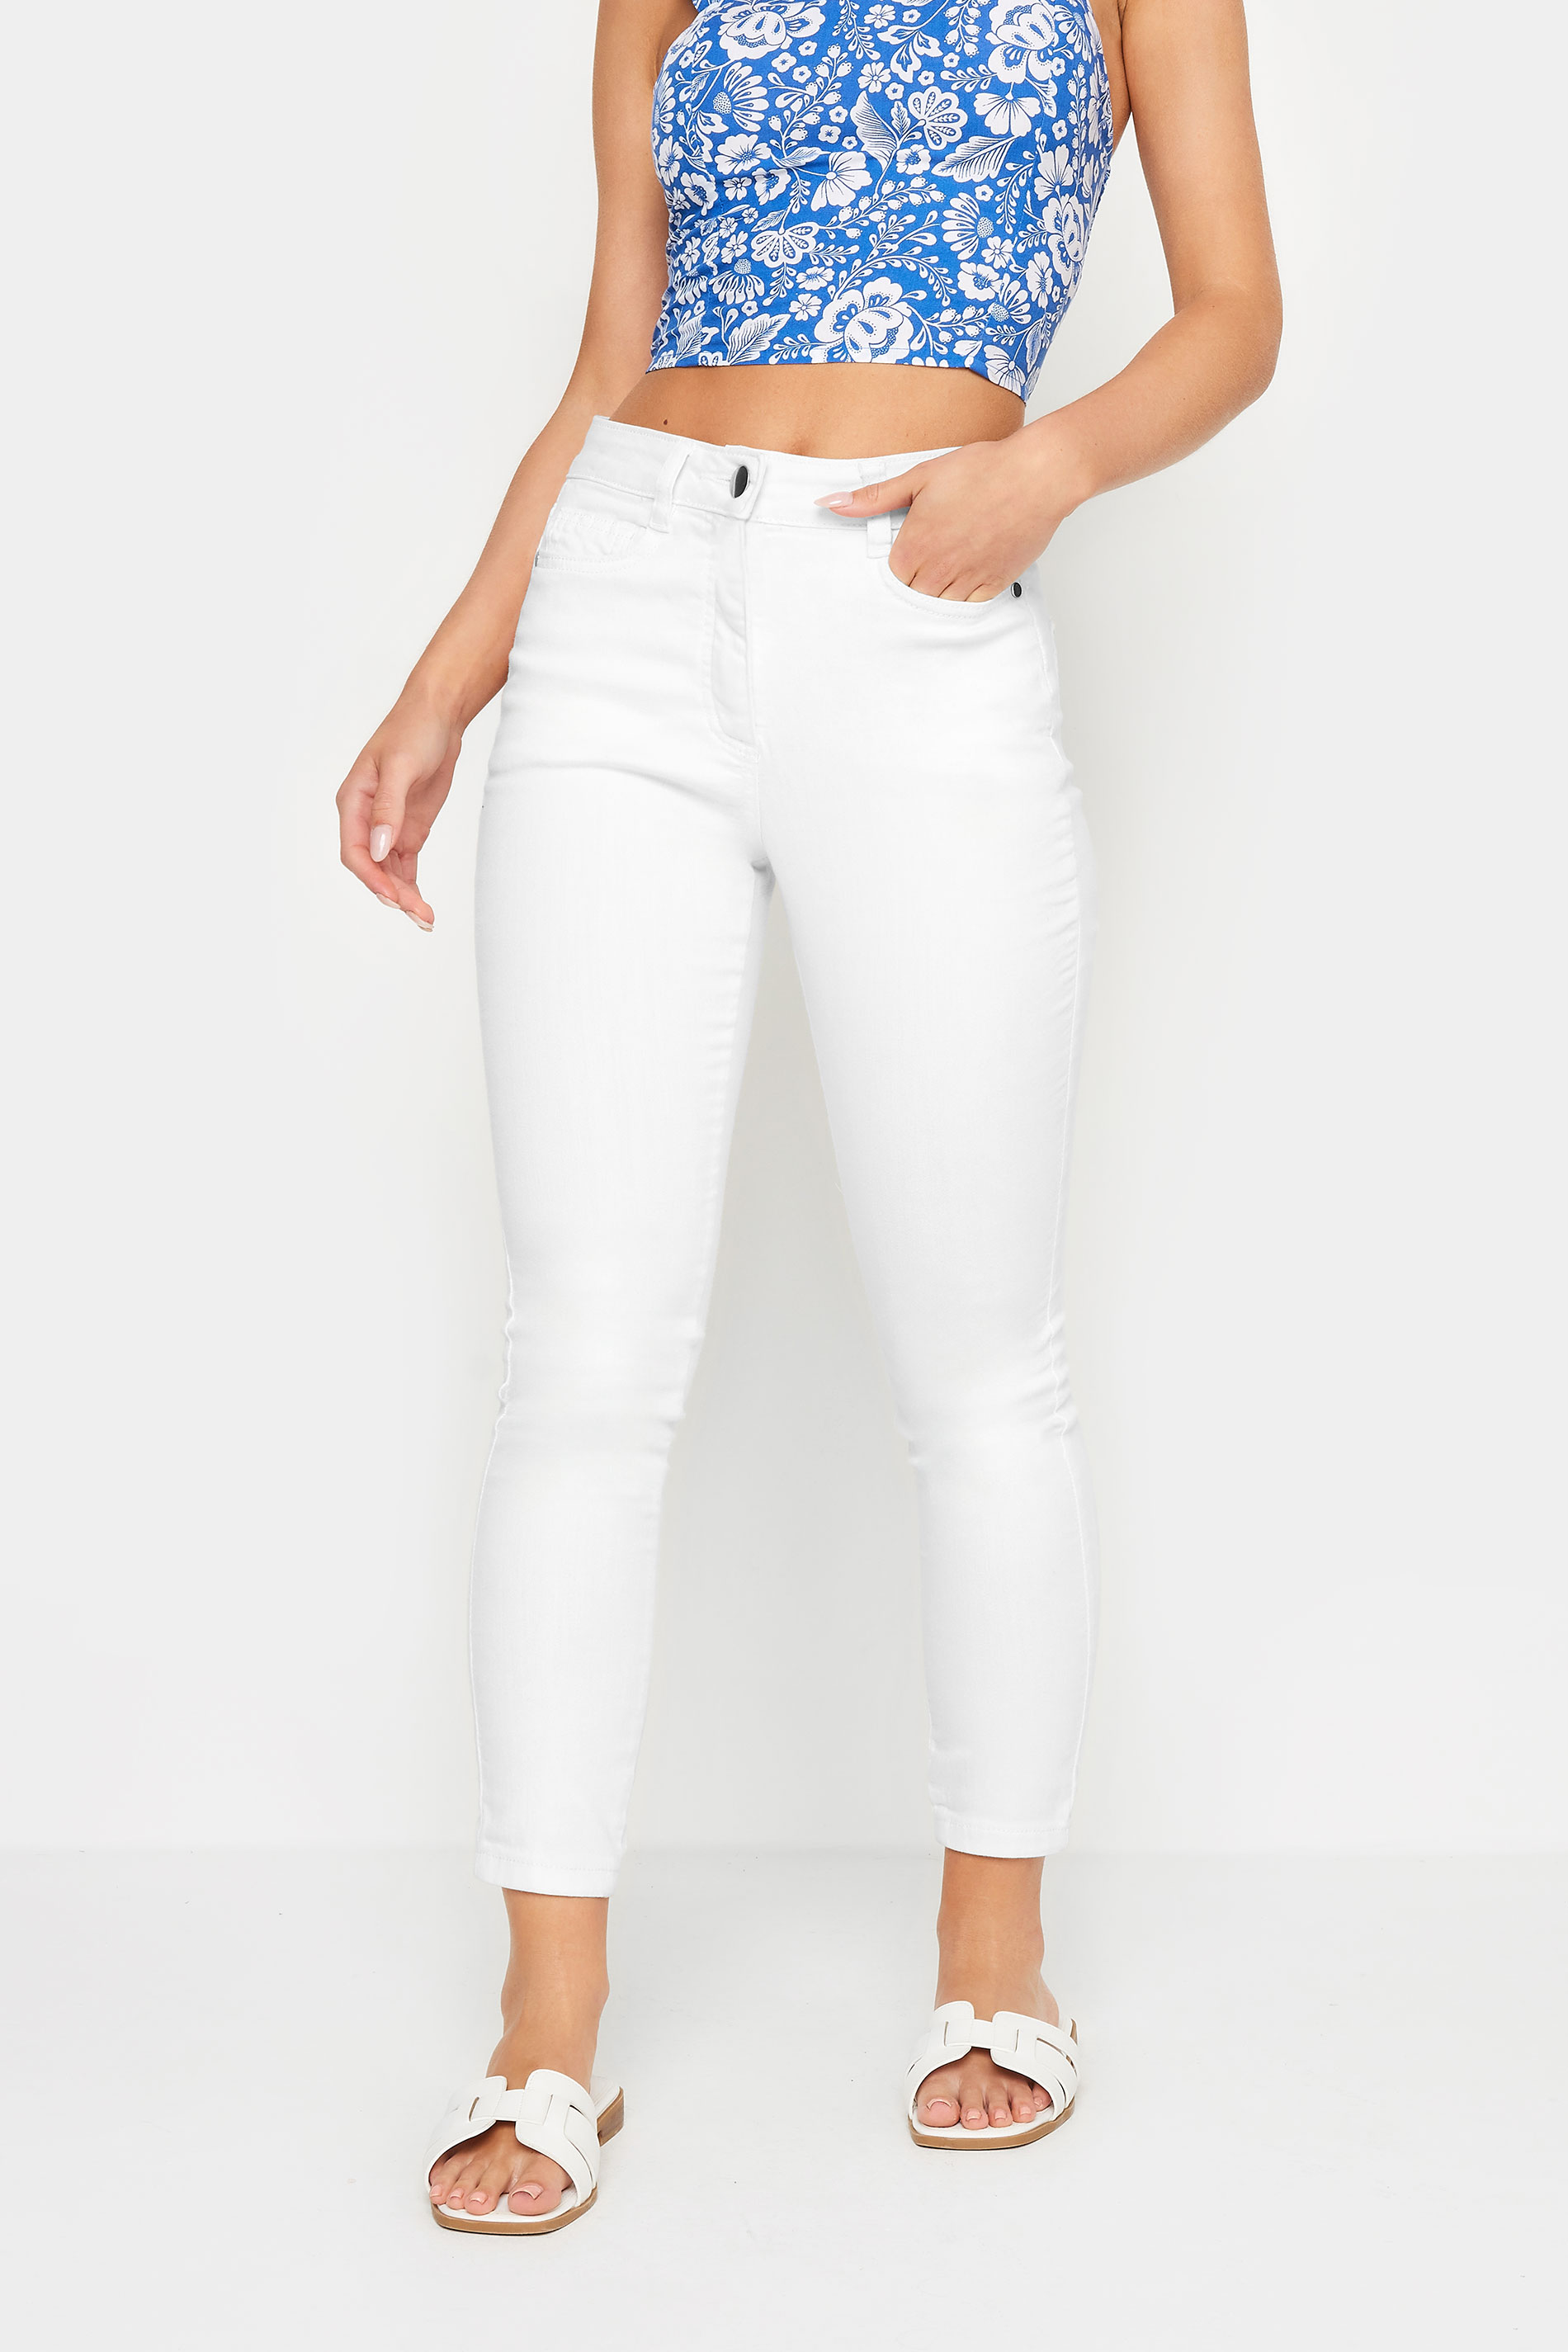 PixieGirl Petite Womens White Skinny Jeans | PixieGirl  2